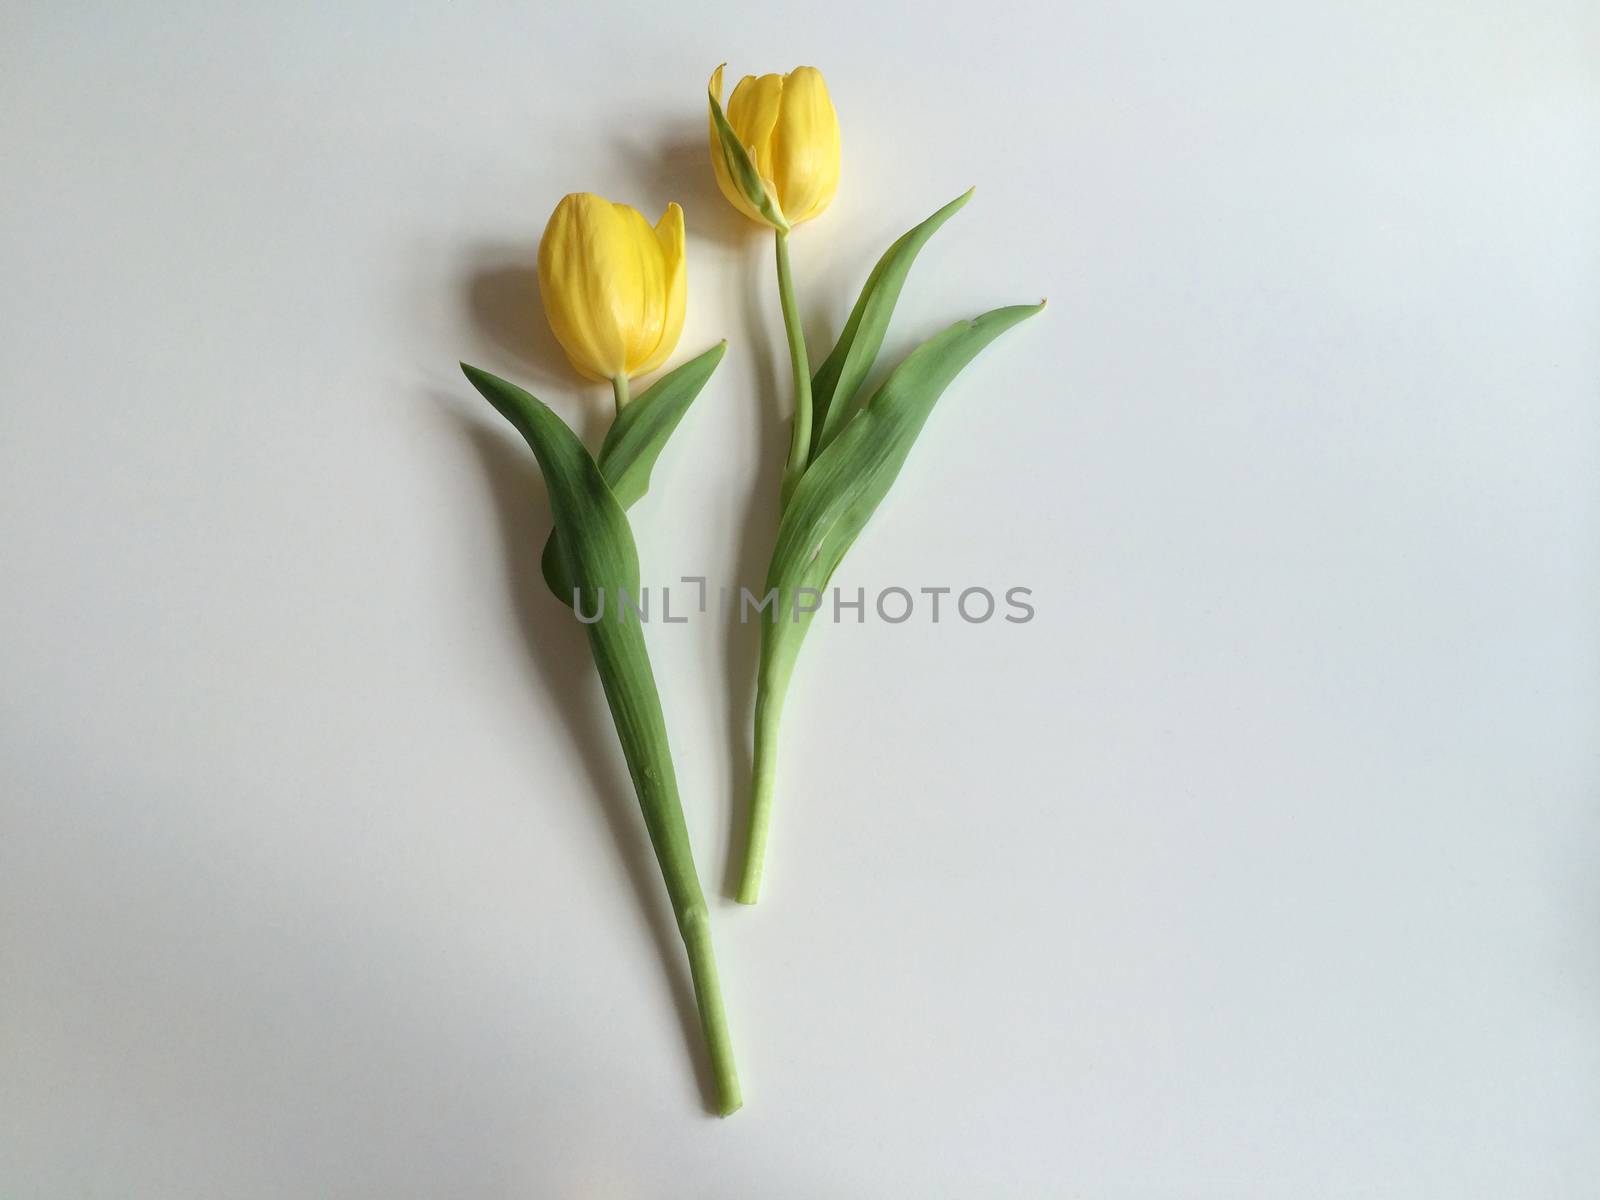 Yellow tulips by mmm